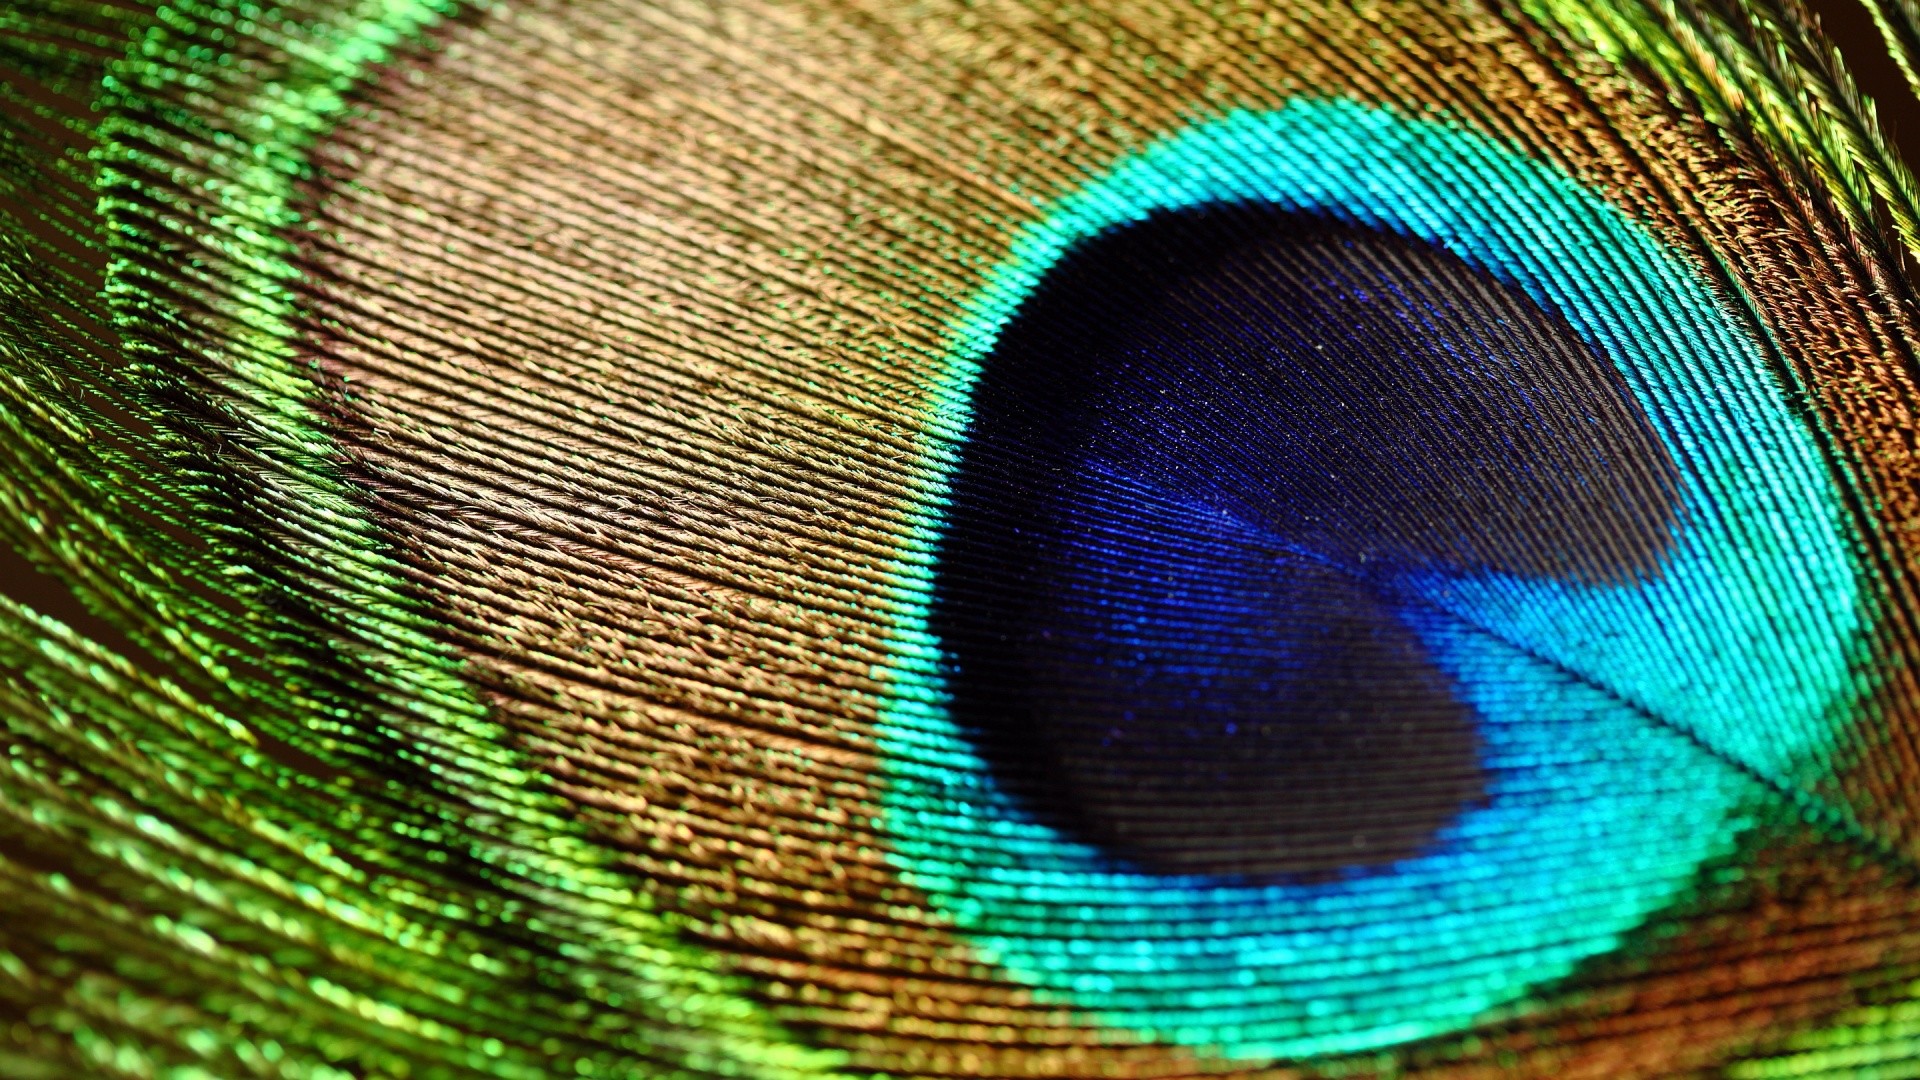 1920x1080 Peacock, Feather, Wallpaper, Hd, High Resolution Images, Samsung Wallpaper,  Windows Wallpaper, Amazing, Colorful, Widescreen, Digital, Artwork, ...